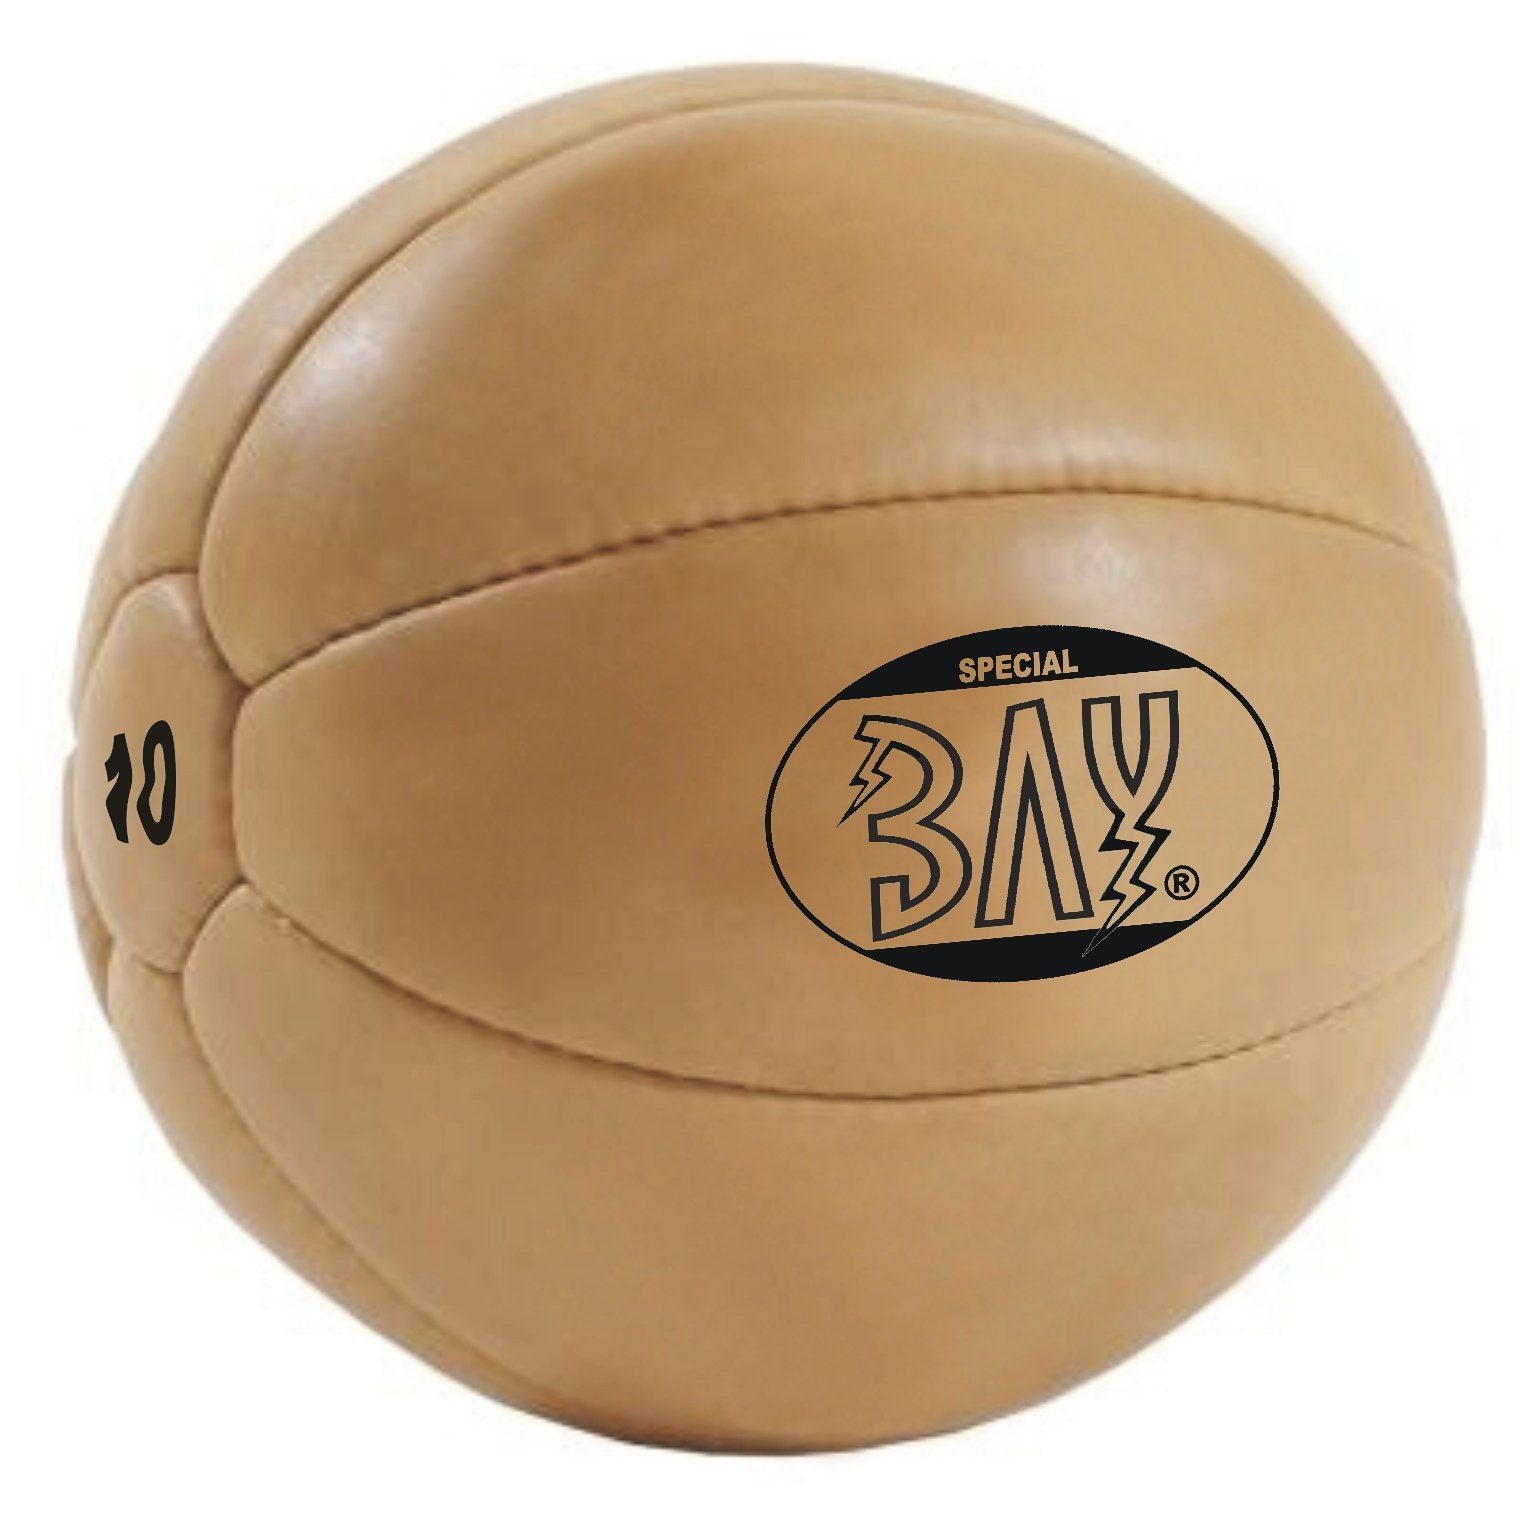 kg klassische Trainingsball Kunstleder Medizinball braun 10kg Vollball Fitnessball Kraftsport Profi natur BAY-Sports Kraftball, Ausführung 10